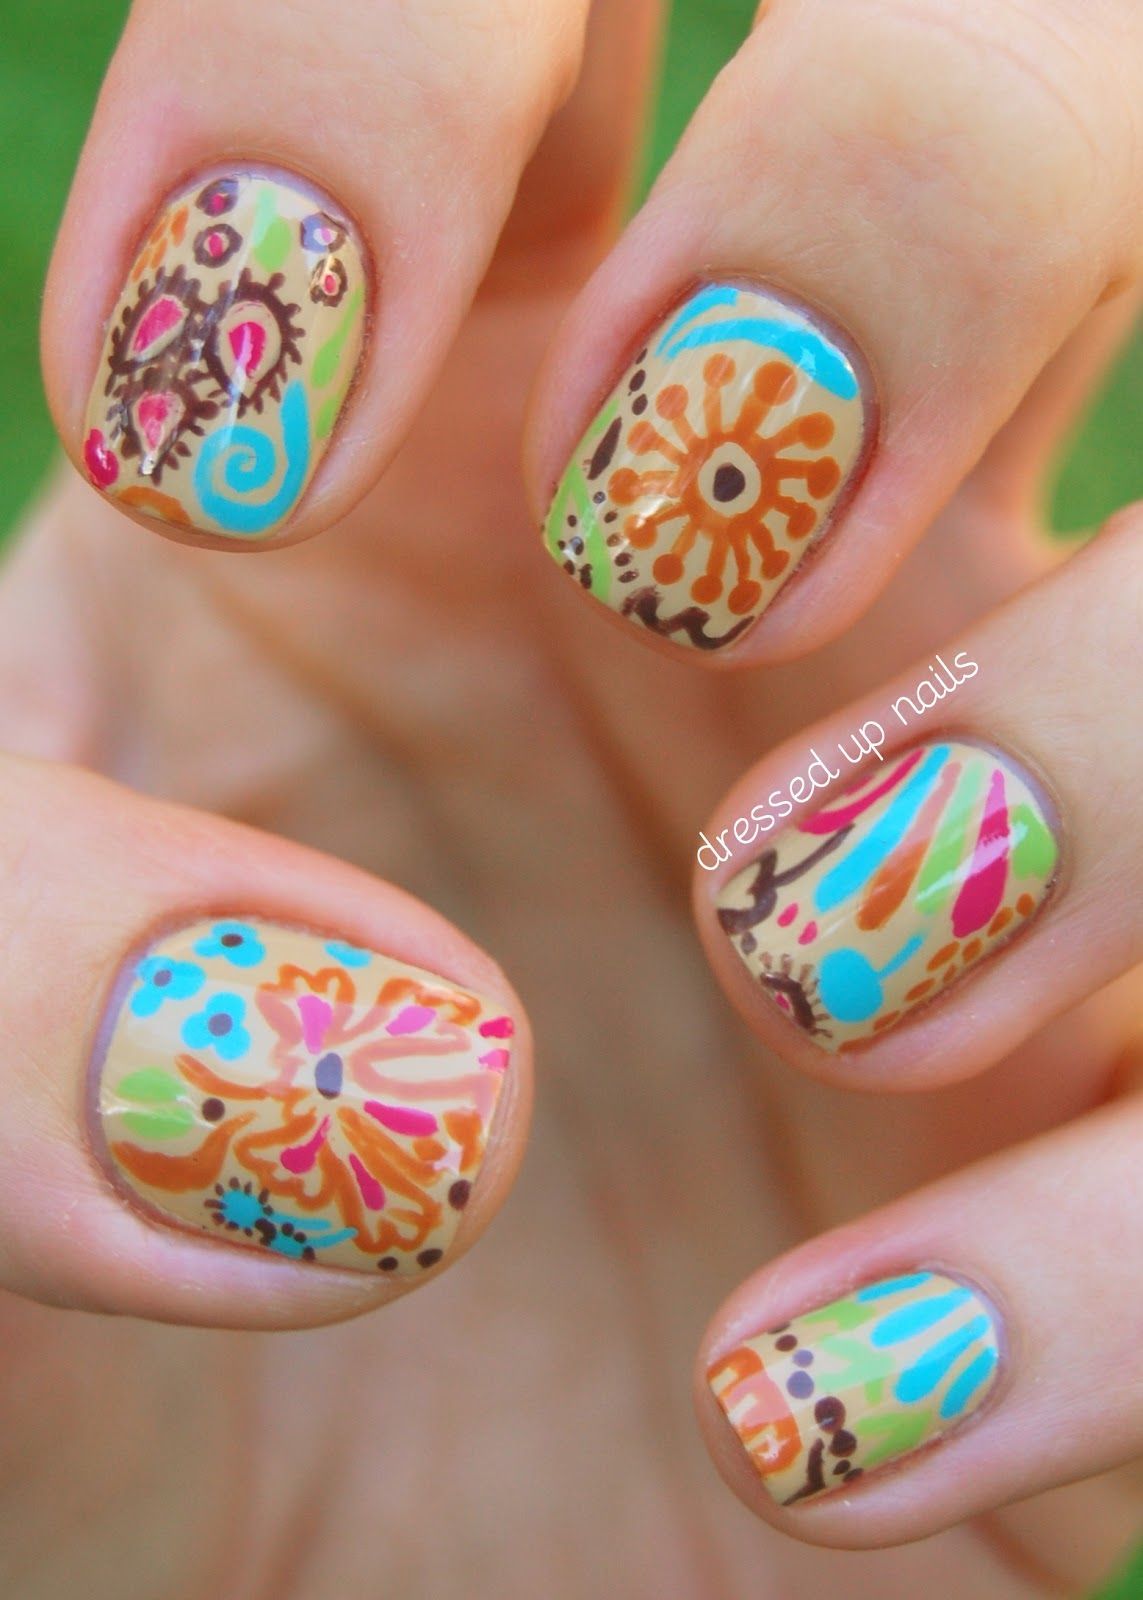 Awesome Dressed Up Nails: Fall floral nail art! pic #Nail #Art